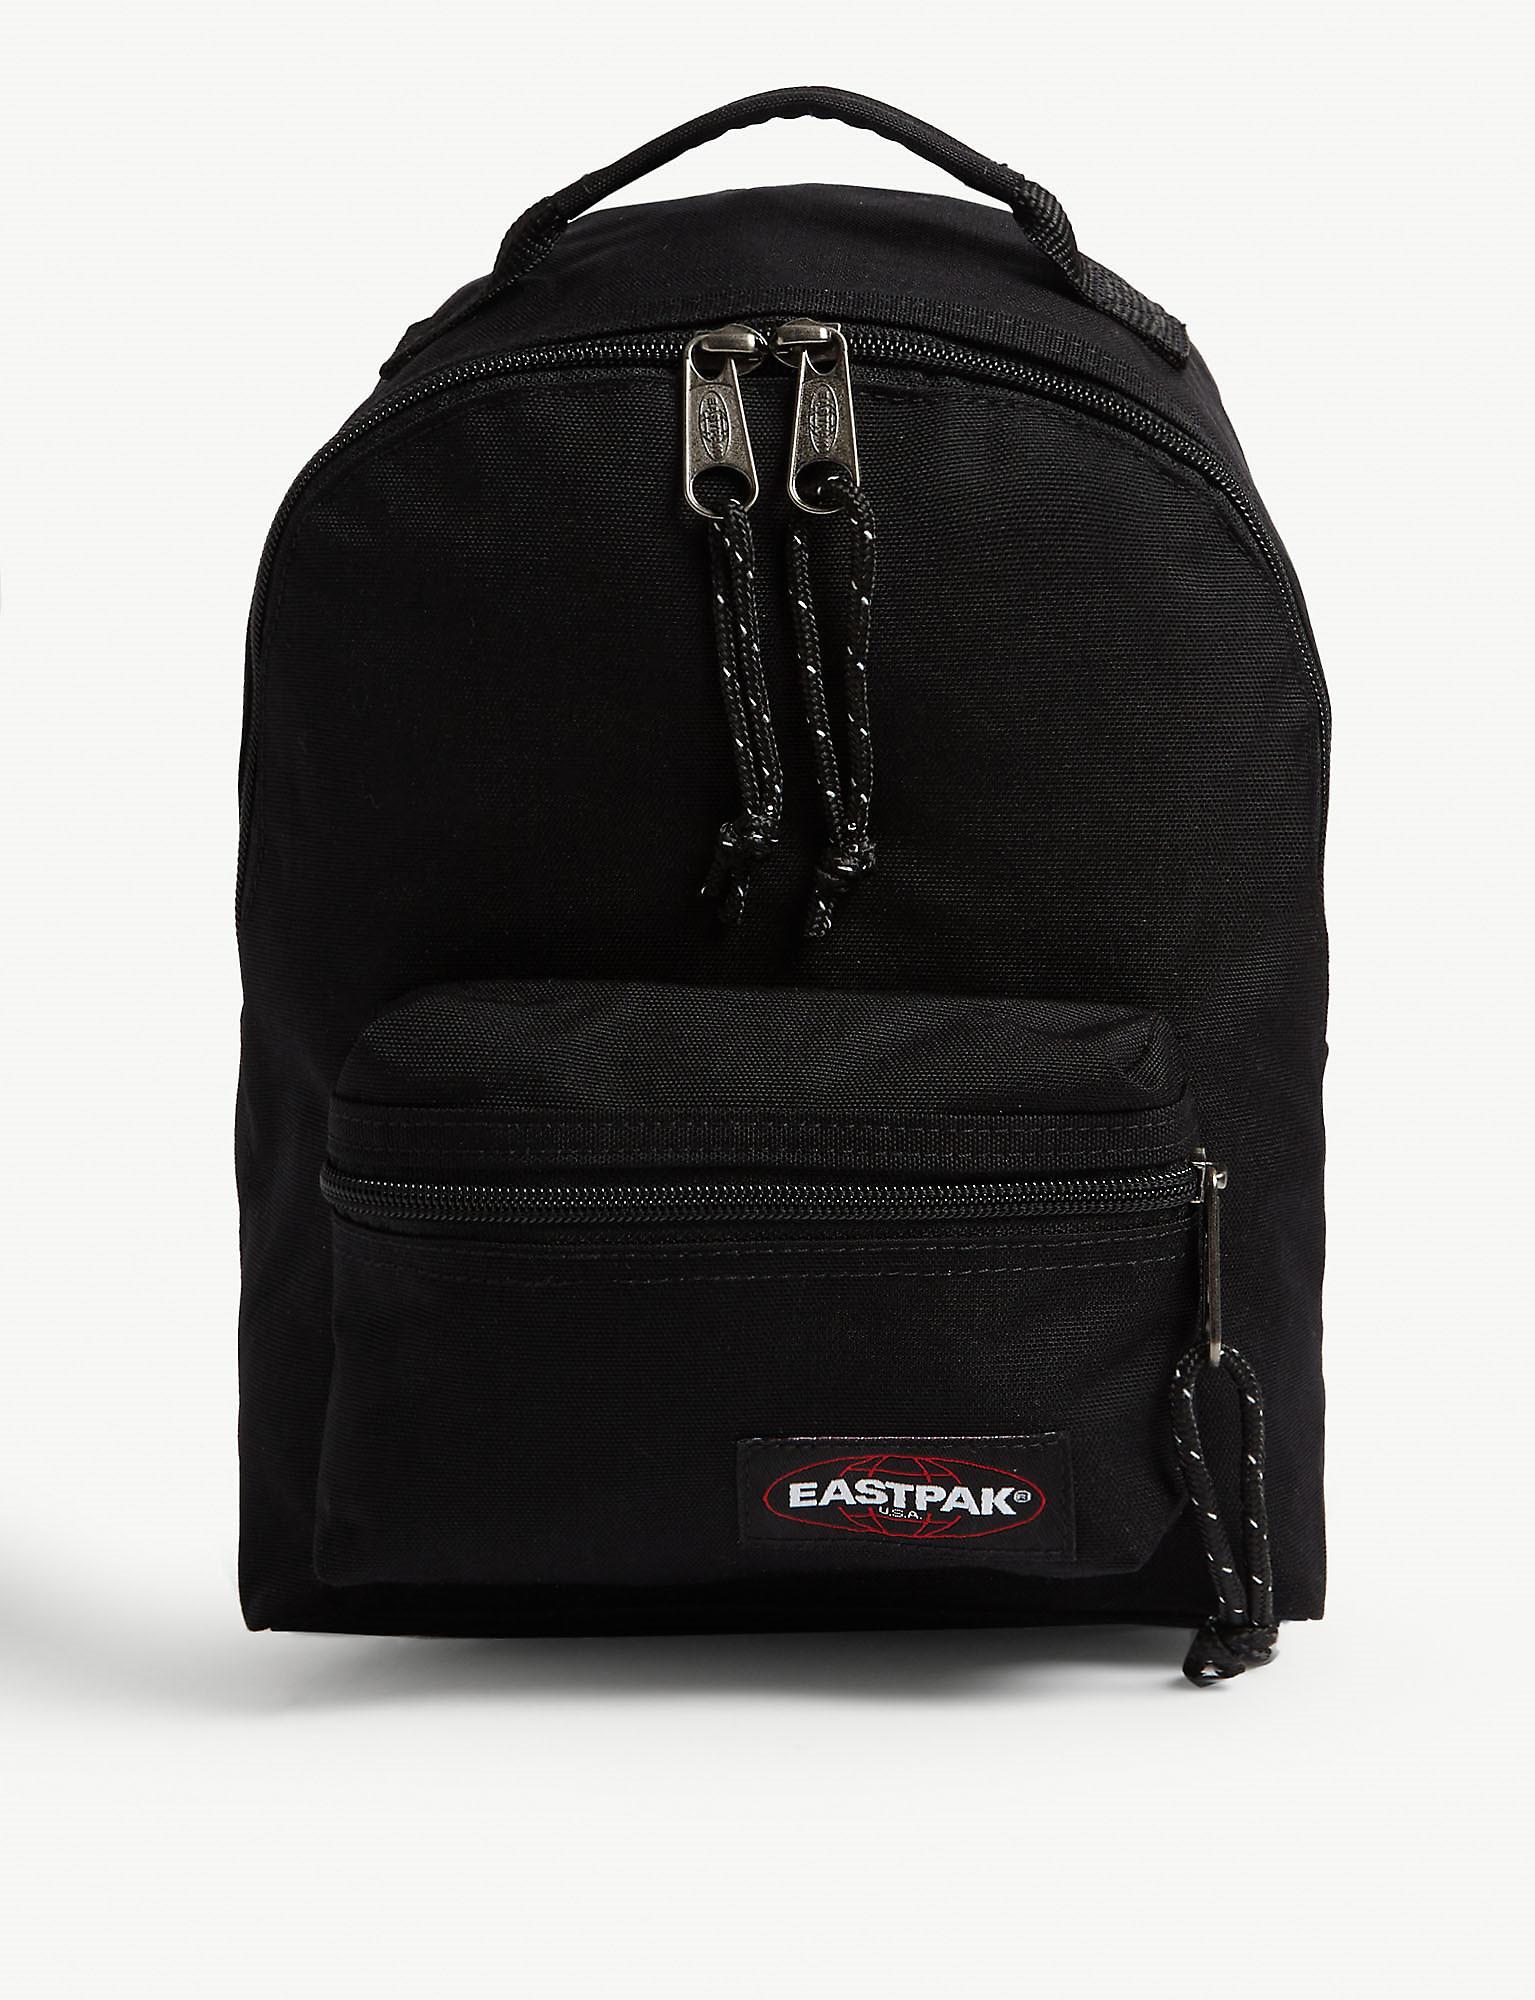 Eastpak Orbit Mini Backpack in Black - Lyst